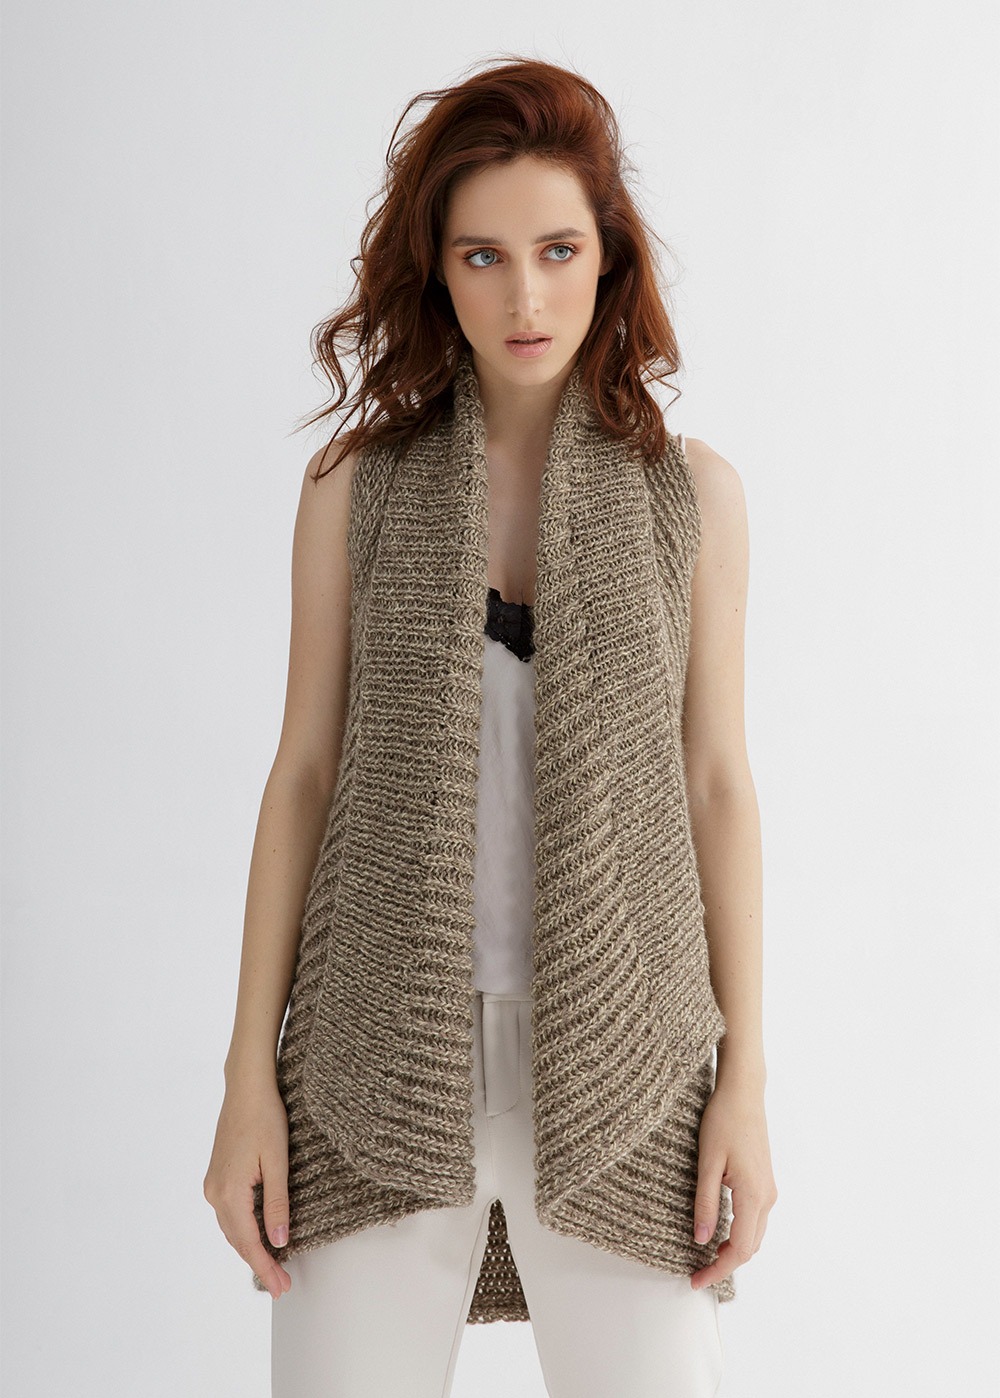 Long vest knitting pattern black and red plaid vest